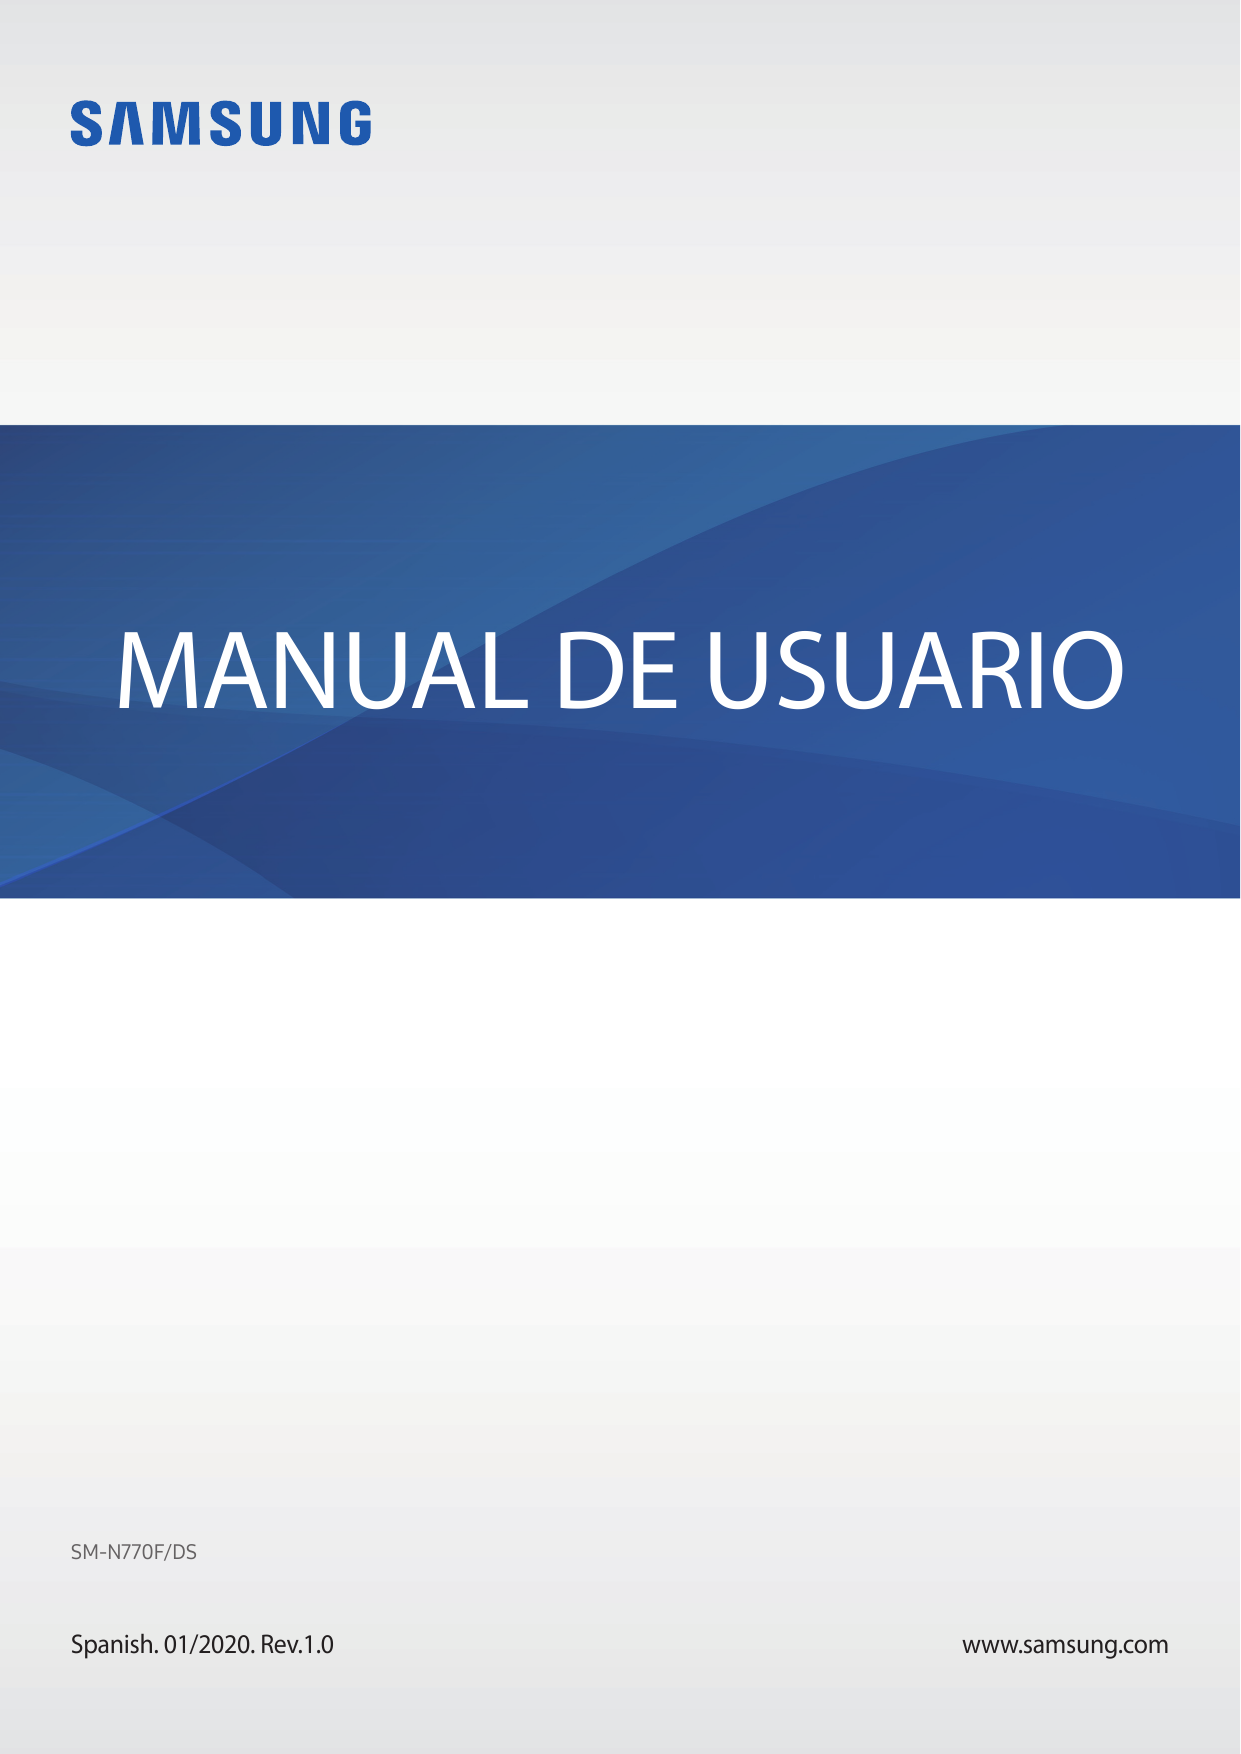 MANUAL DE USUARIOSM-N770F/DSSpanish. 01/2020. Rev.1.0www.samsung.com